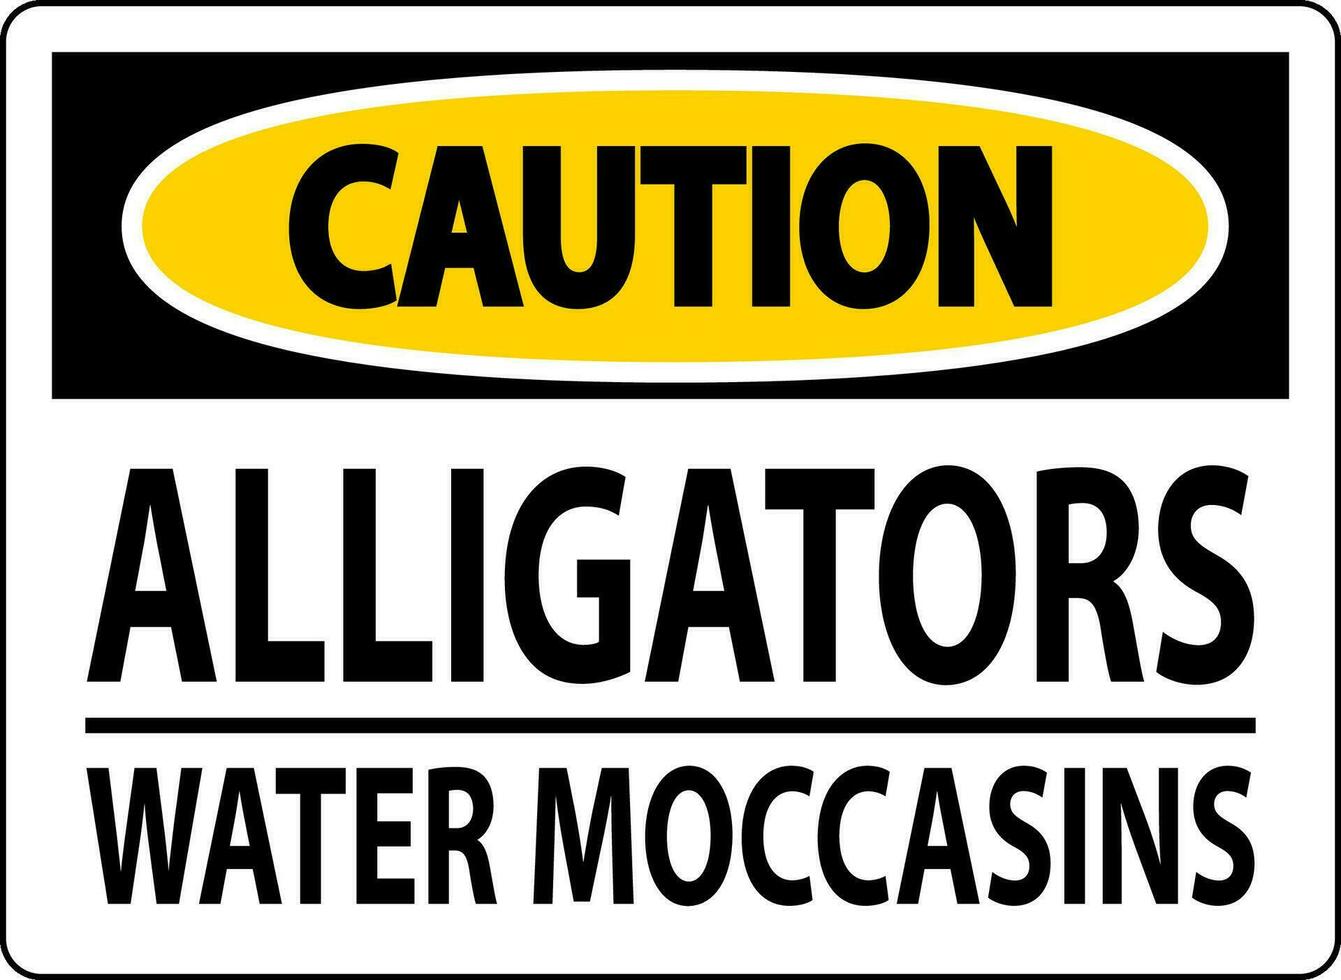 precaución firmar caimanes - agua mocasines vector